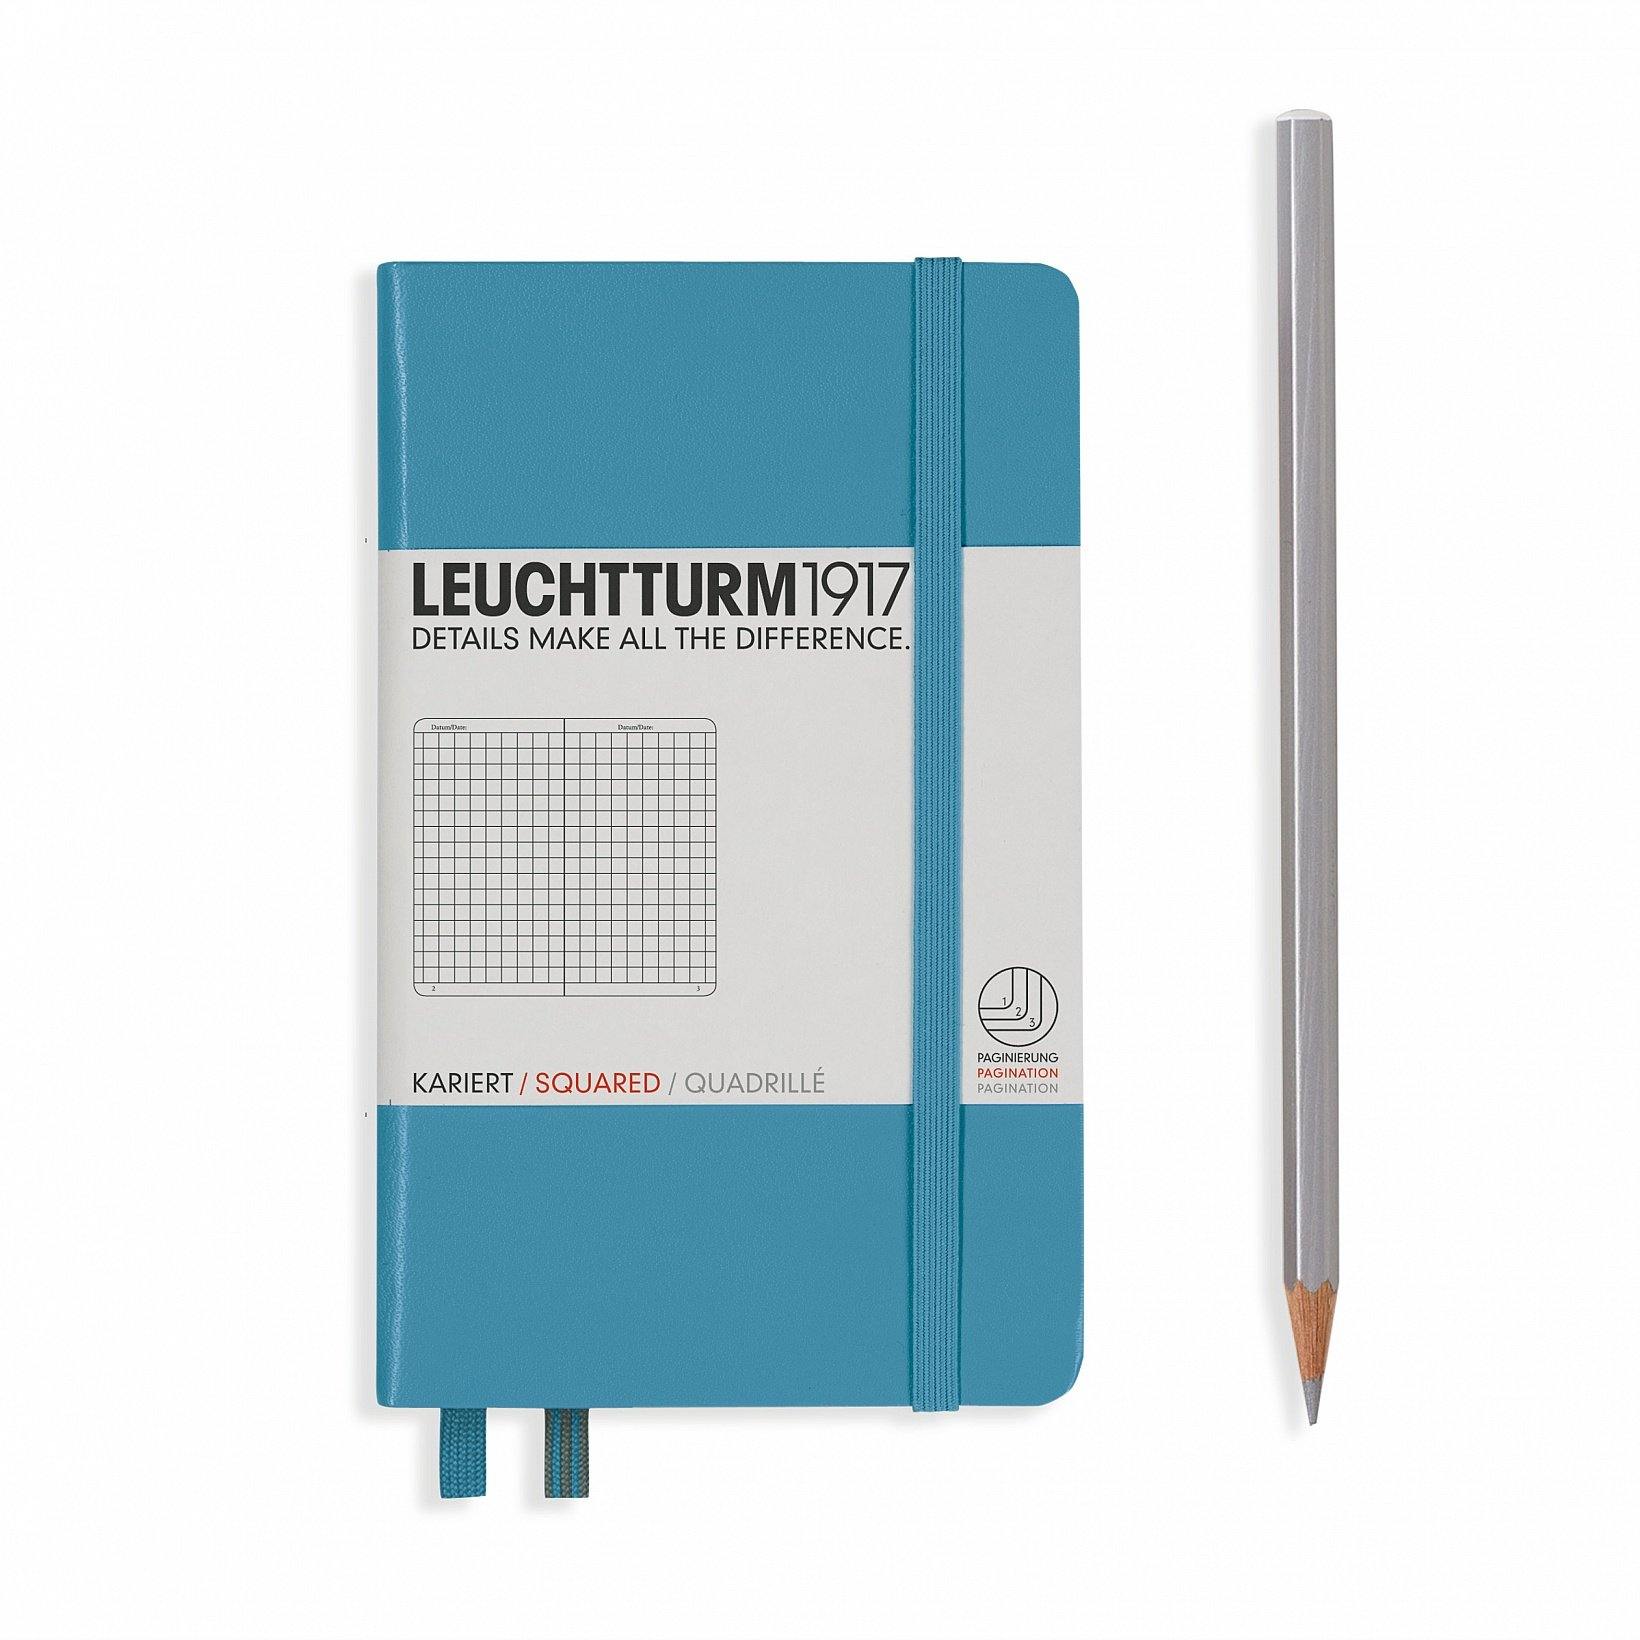 Leuchtturm1917 Pocket Squared Hardcover Notebook - Laywine's